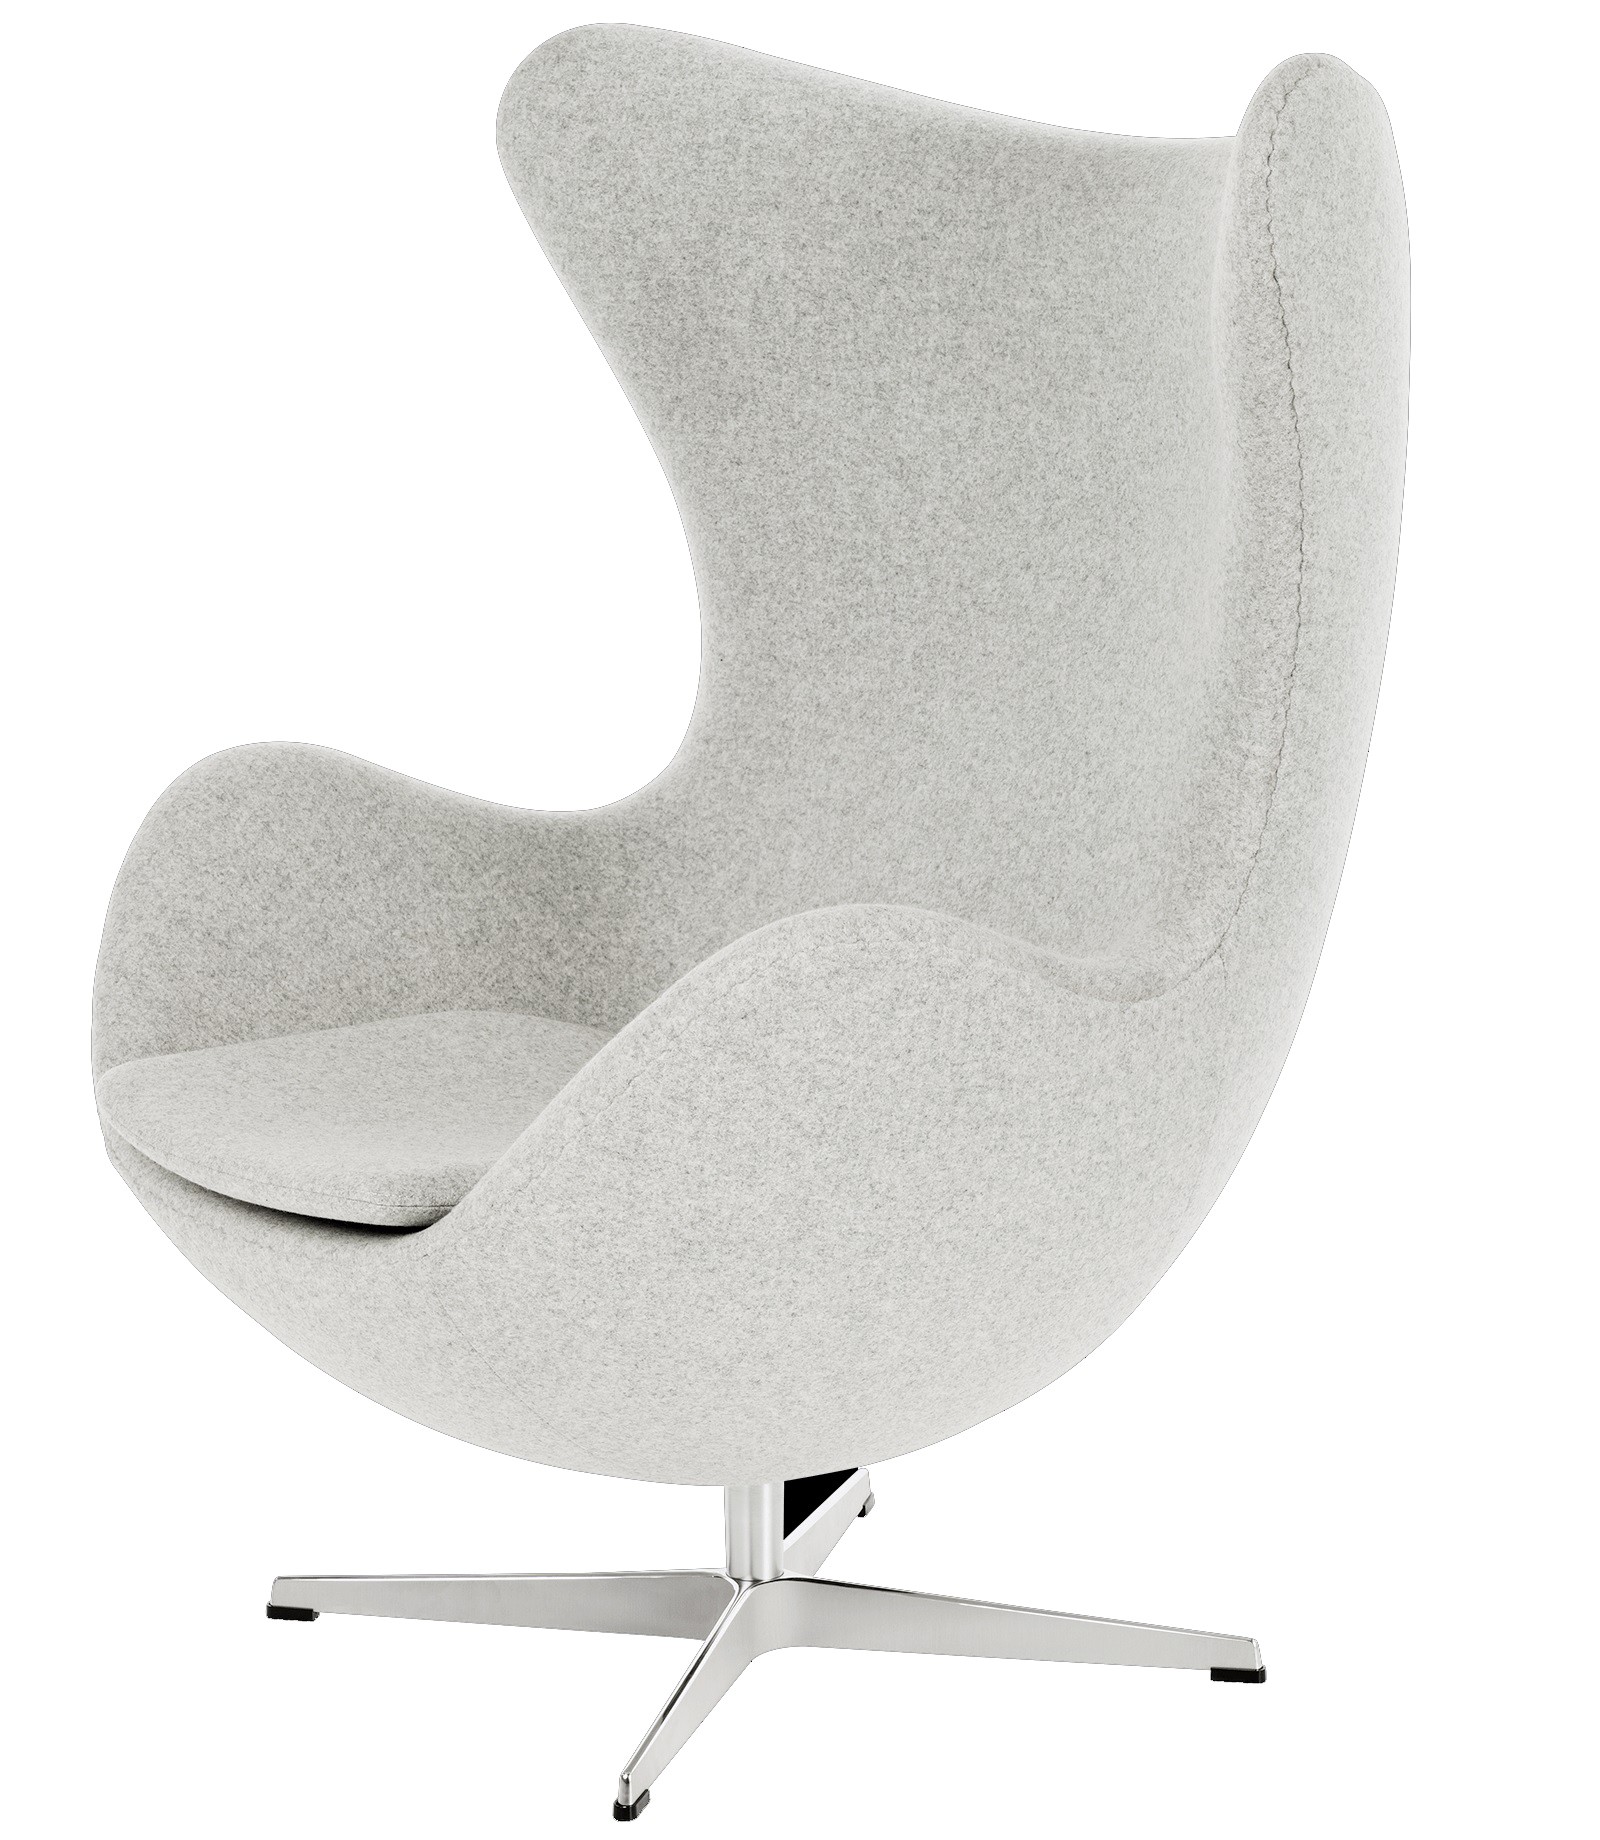 Jacobsen Armlehnstuhle Egg Chair Design Armlehnstuhle